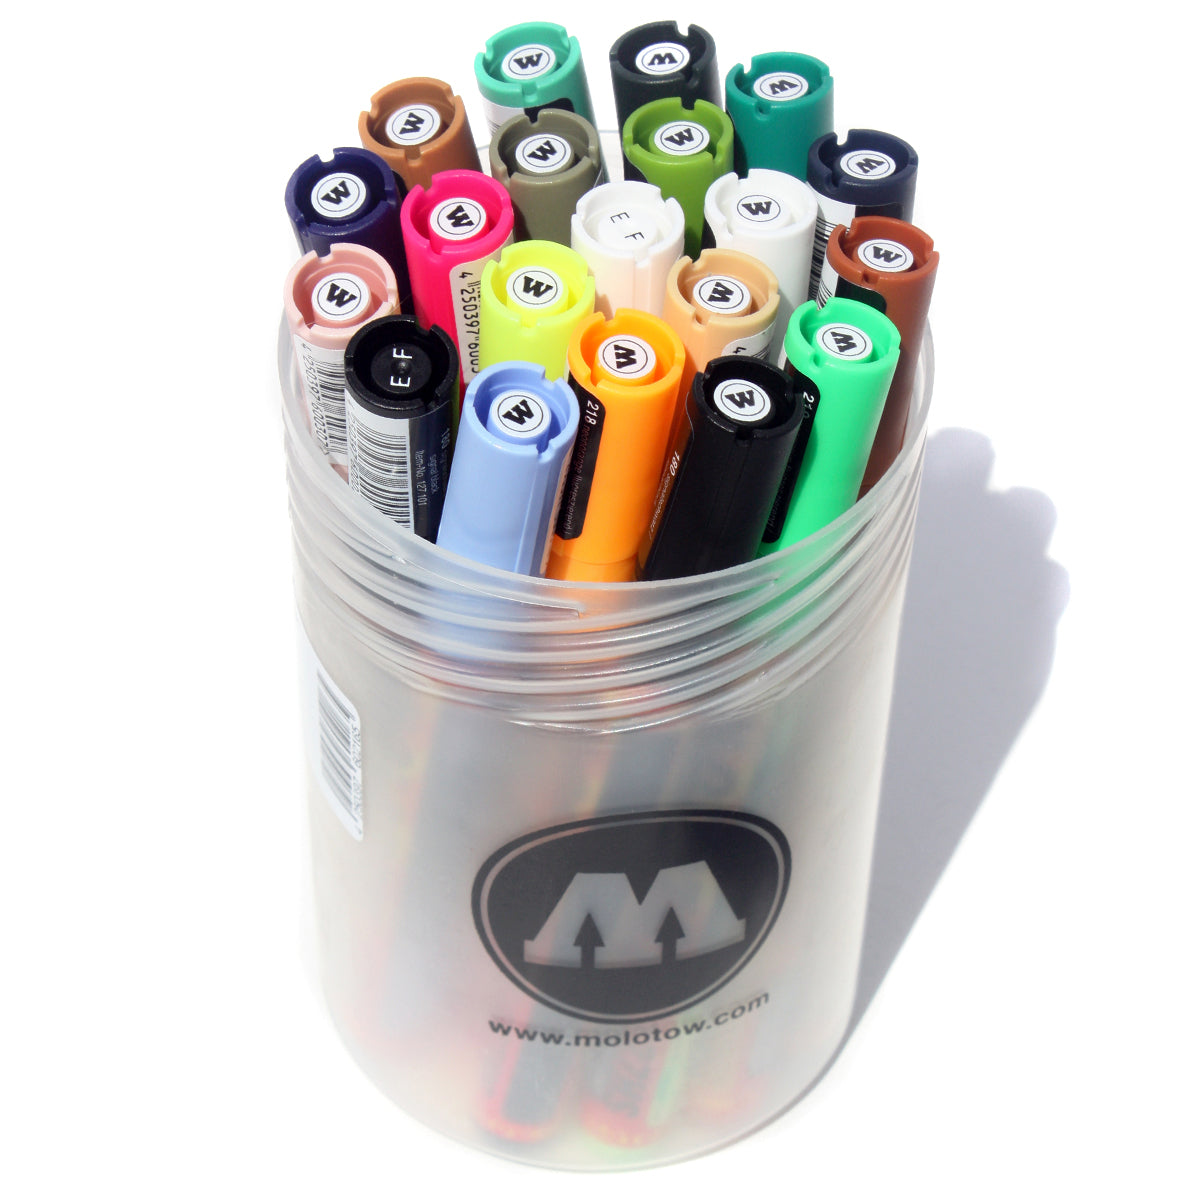 Molotow Acrylic Paint Markers 1mm